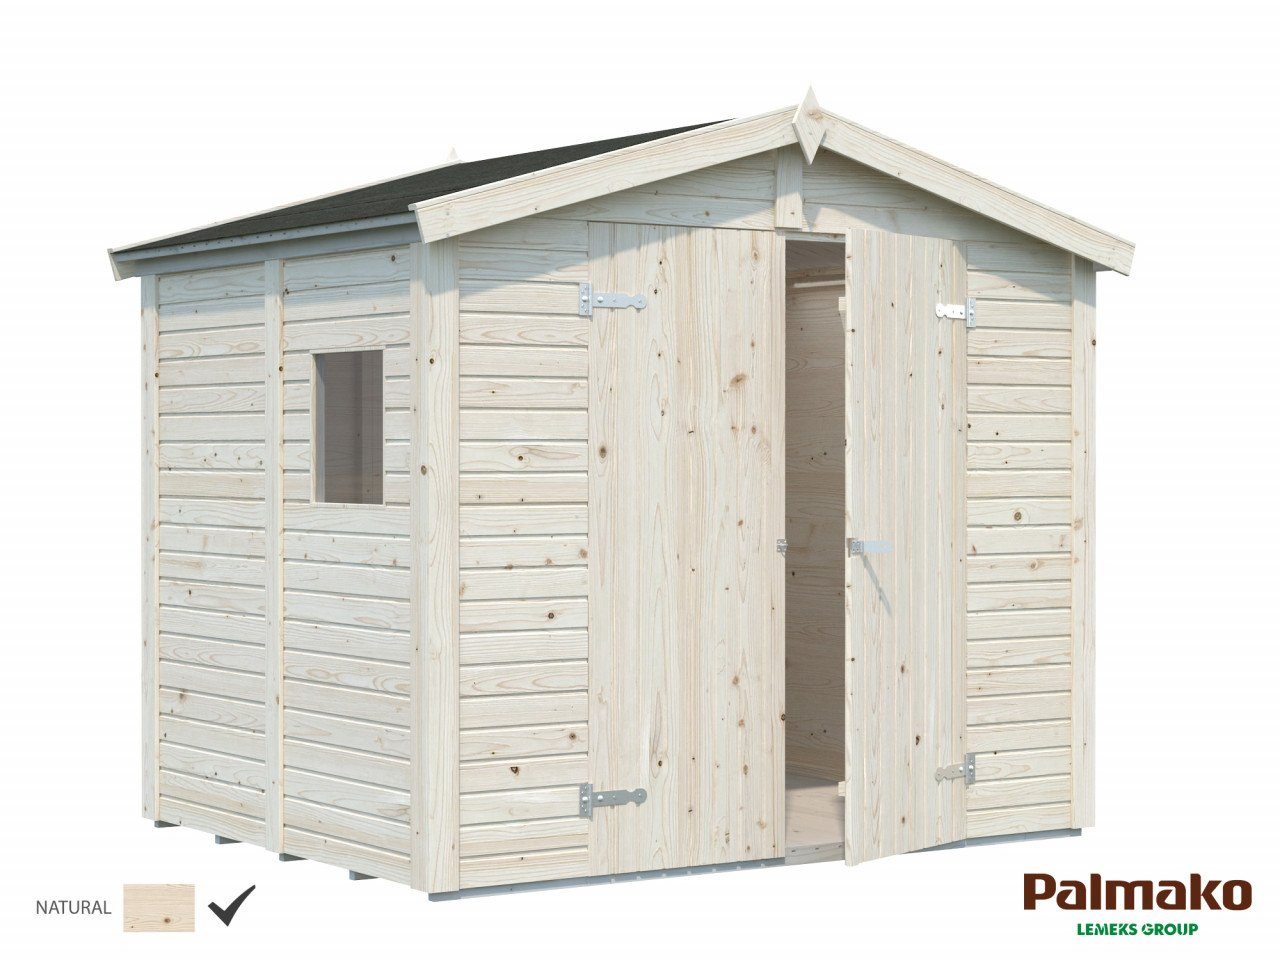 cm 243x190 4,6 Gerätehaus Holz farblos Dan Gartenhaus, Palmako BxT: